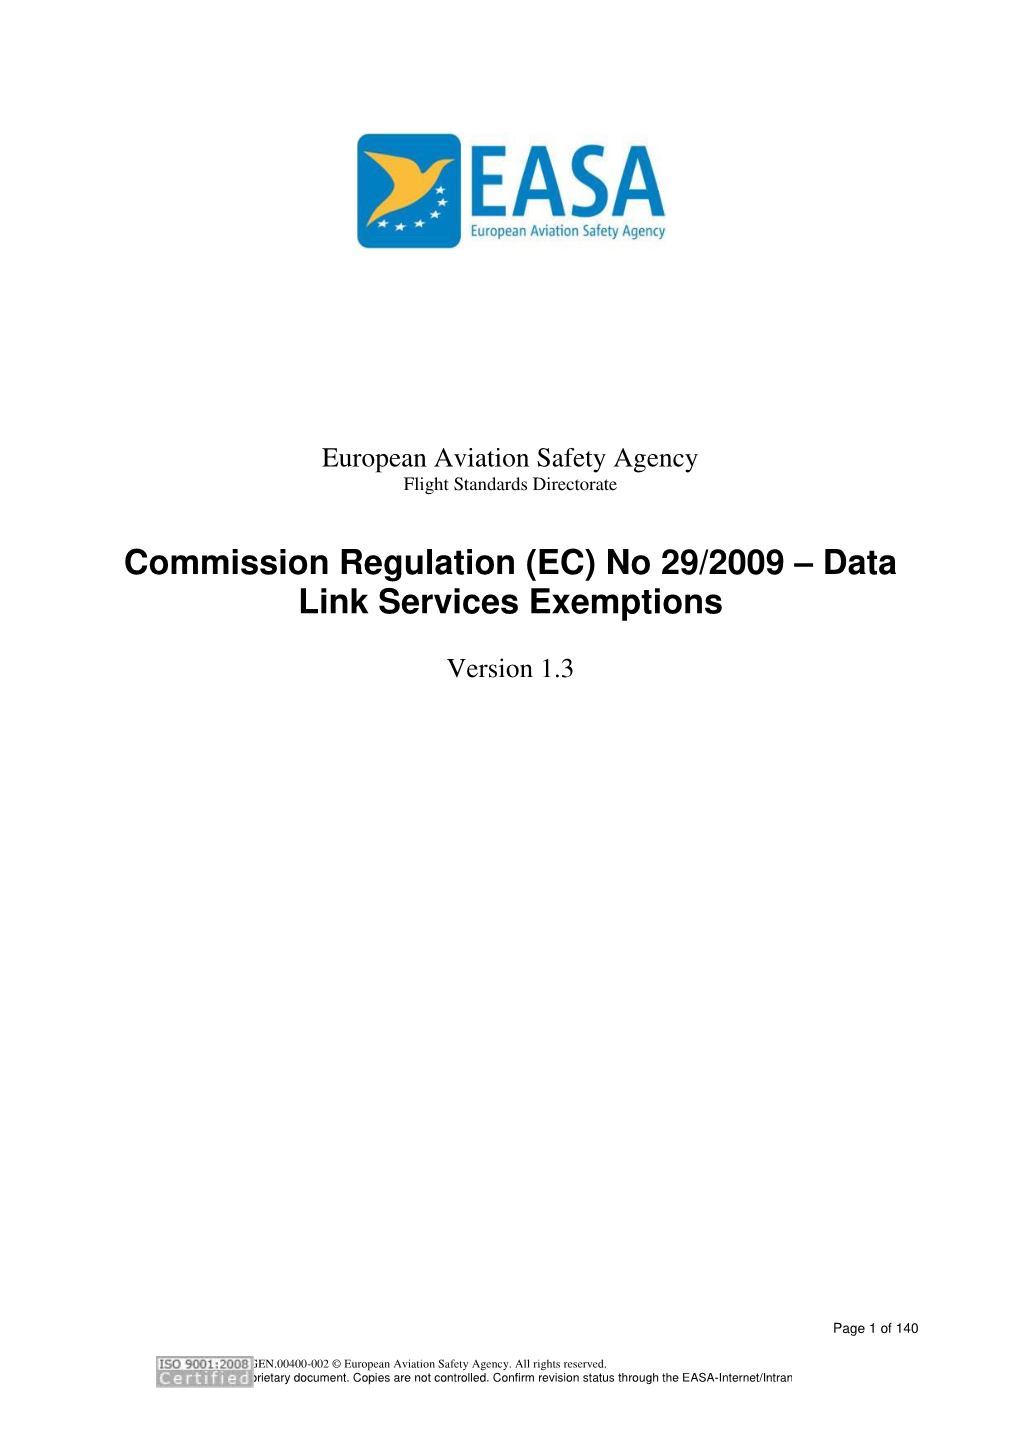 Commission Regulation (EC) No 29/2009 – Data Link Services Exemptions